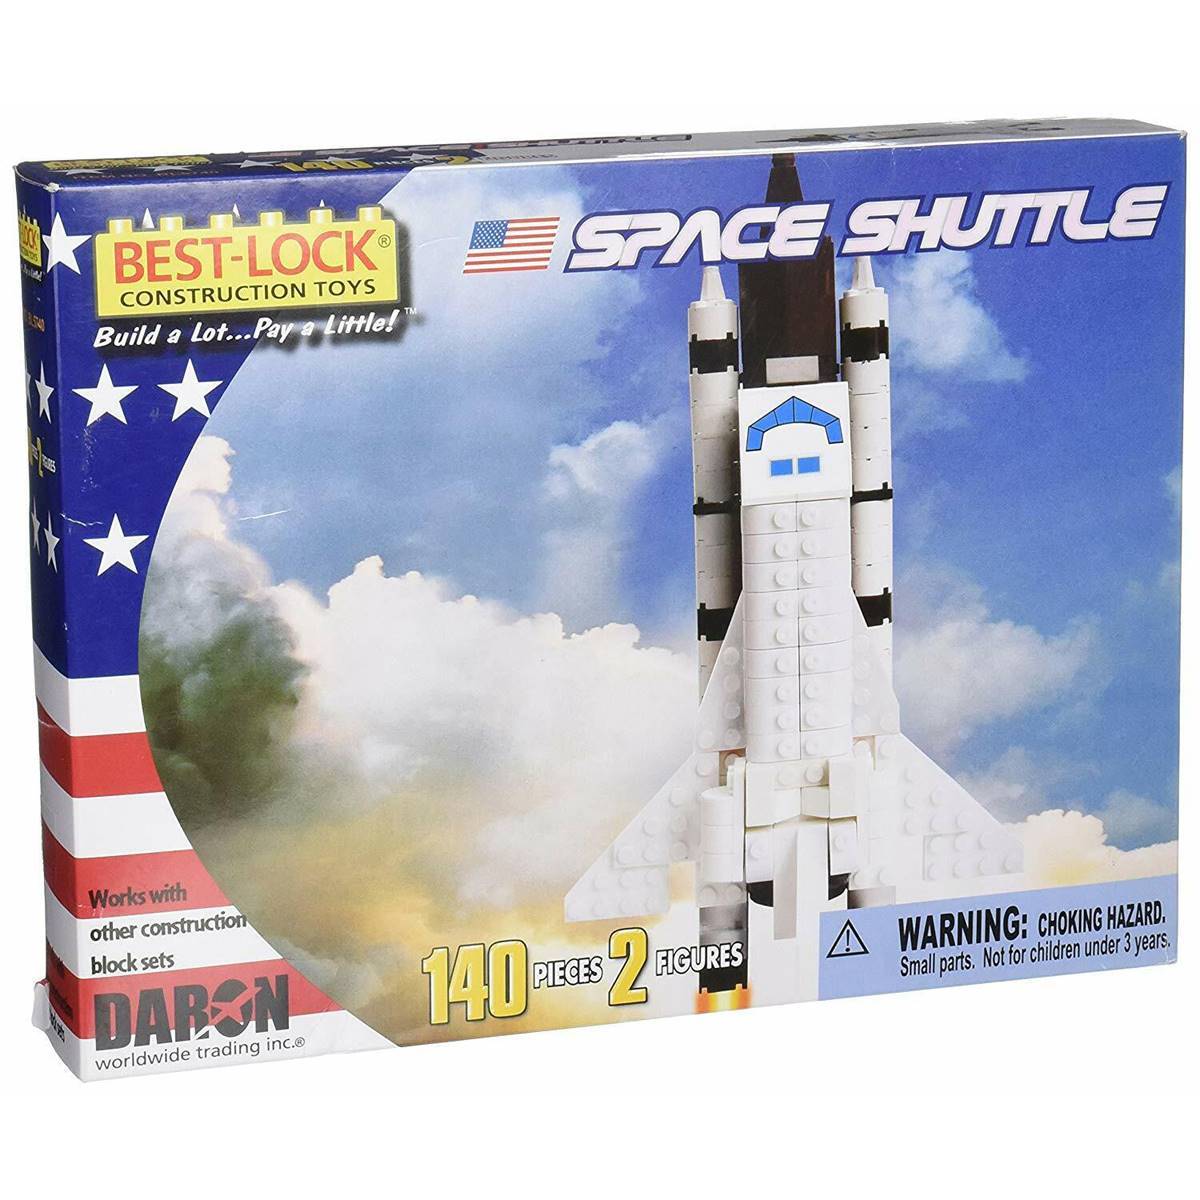 Best-Lock Construction Toys Space Shuttle